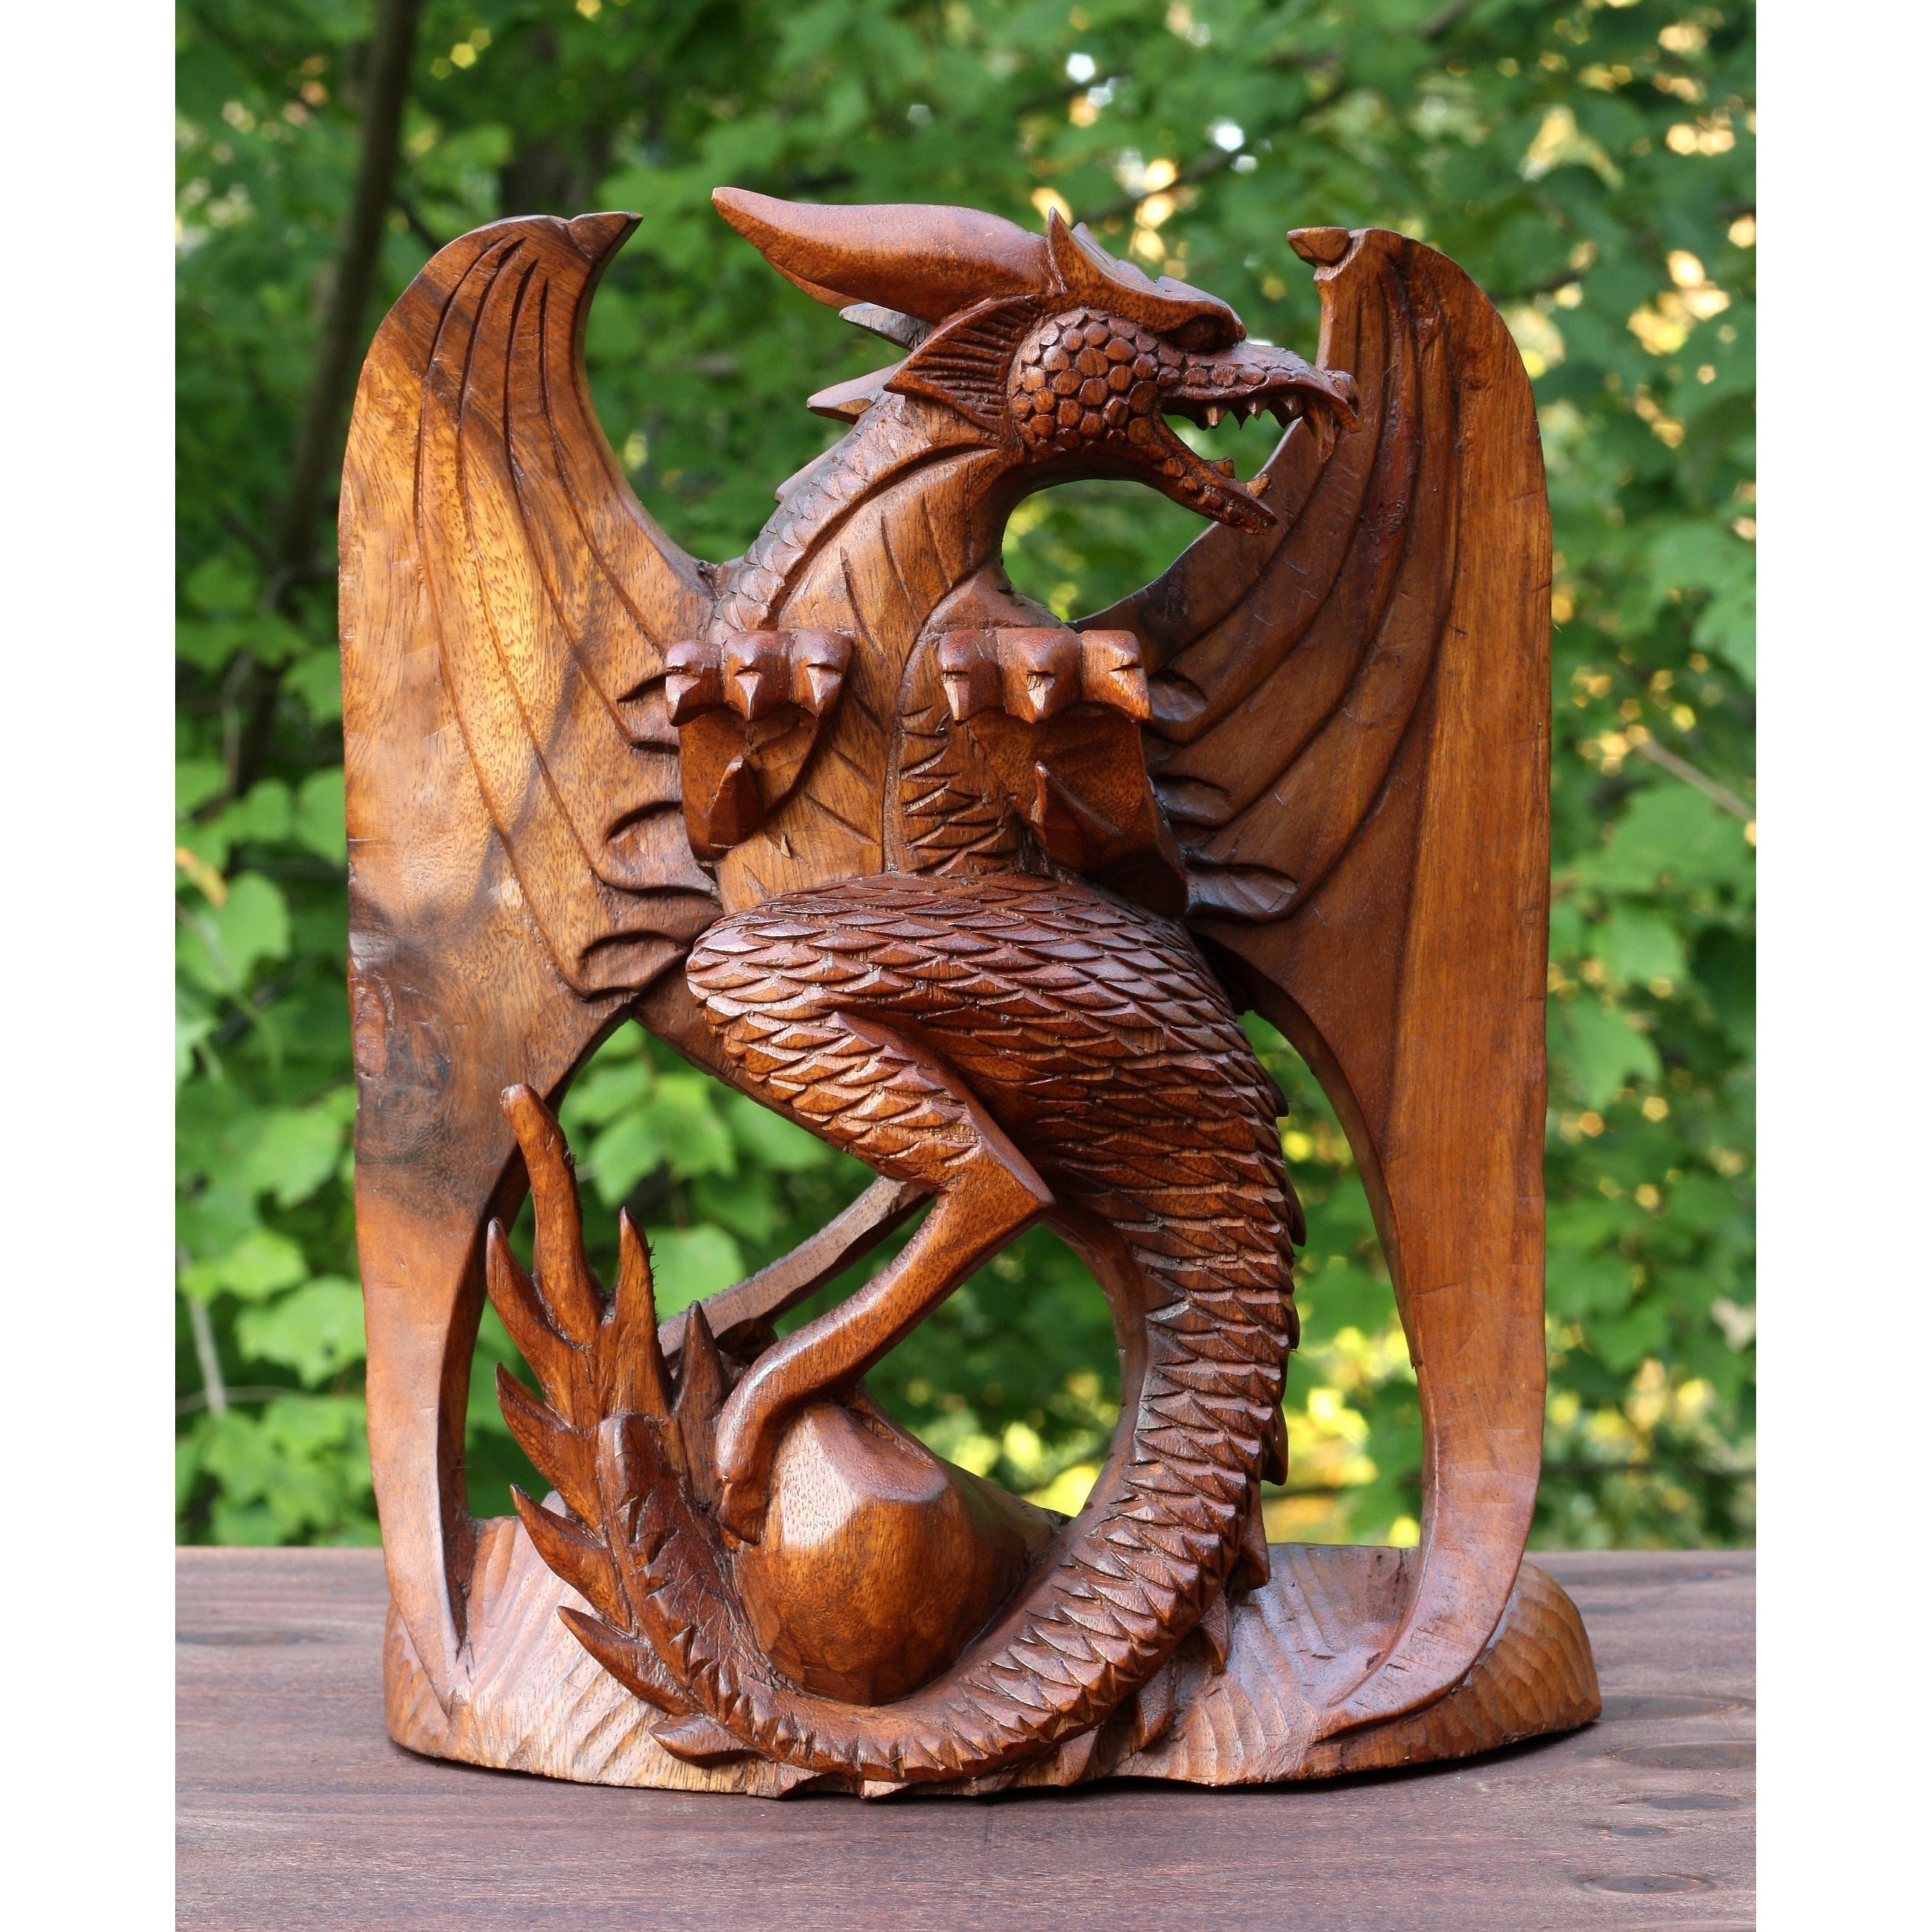 Wooden Handmade Skyrim Dragon Statue Sculpture Handcrafted Gift Art Home  Decor Figurine Accent Decoration Artwork Hand Carved - Bed Bath & Beyond -  38408753